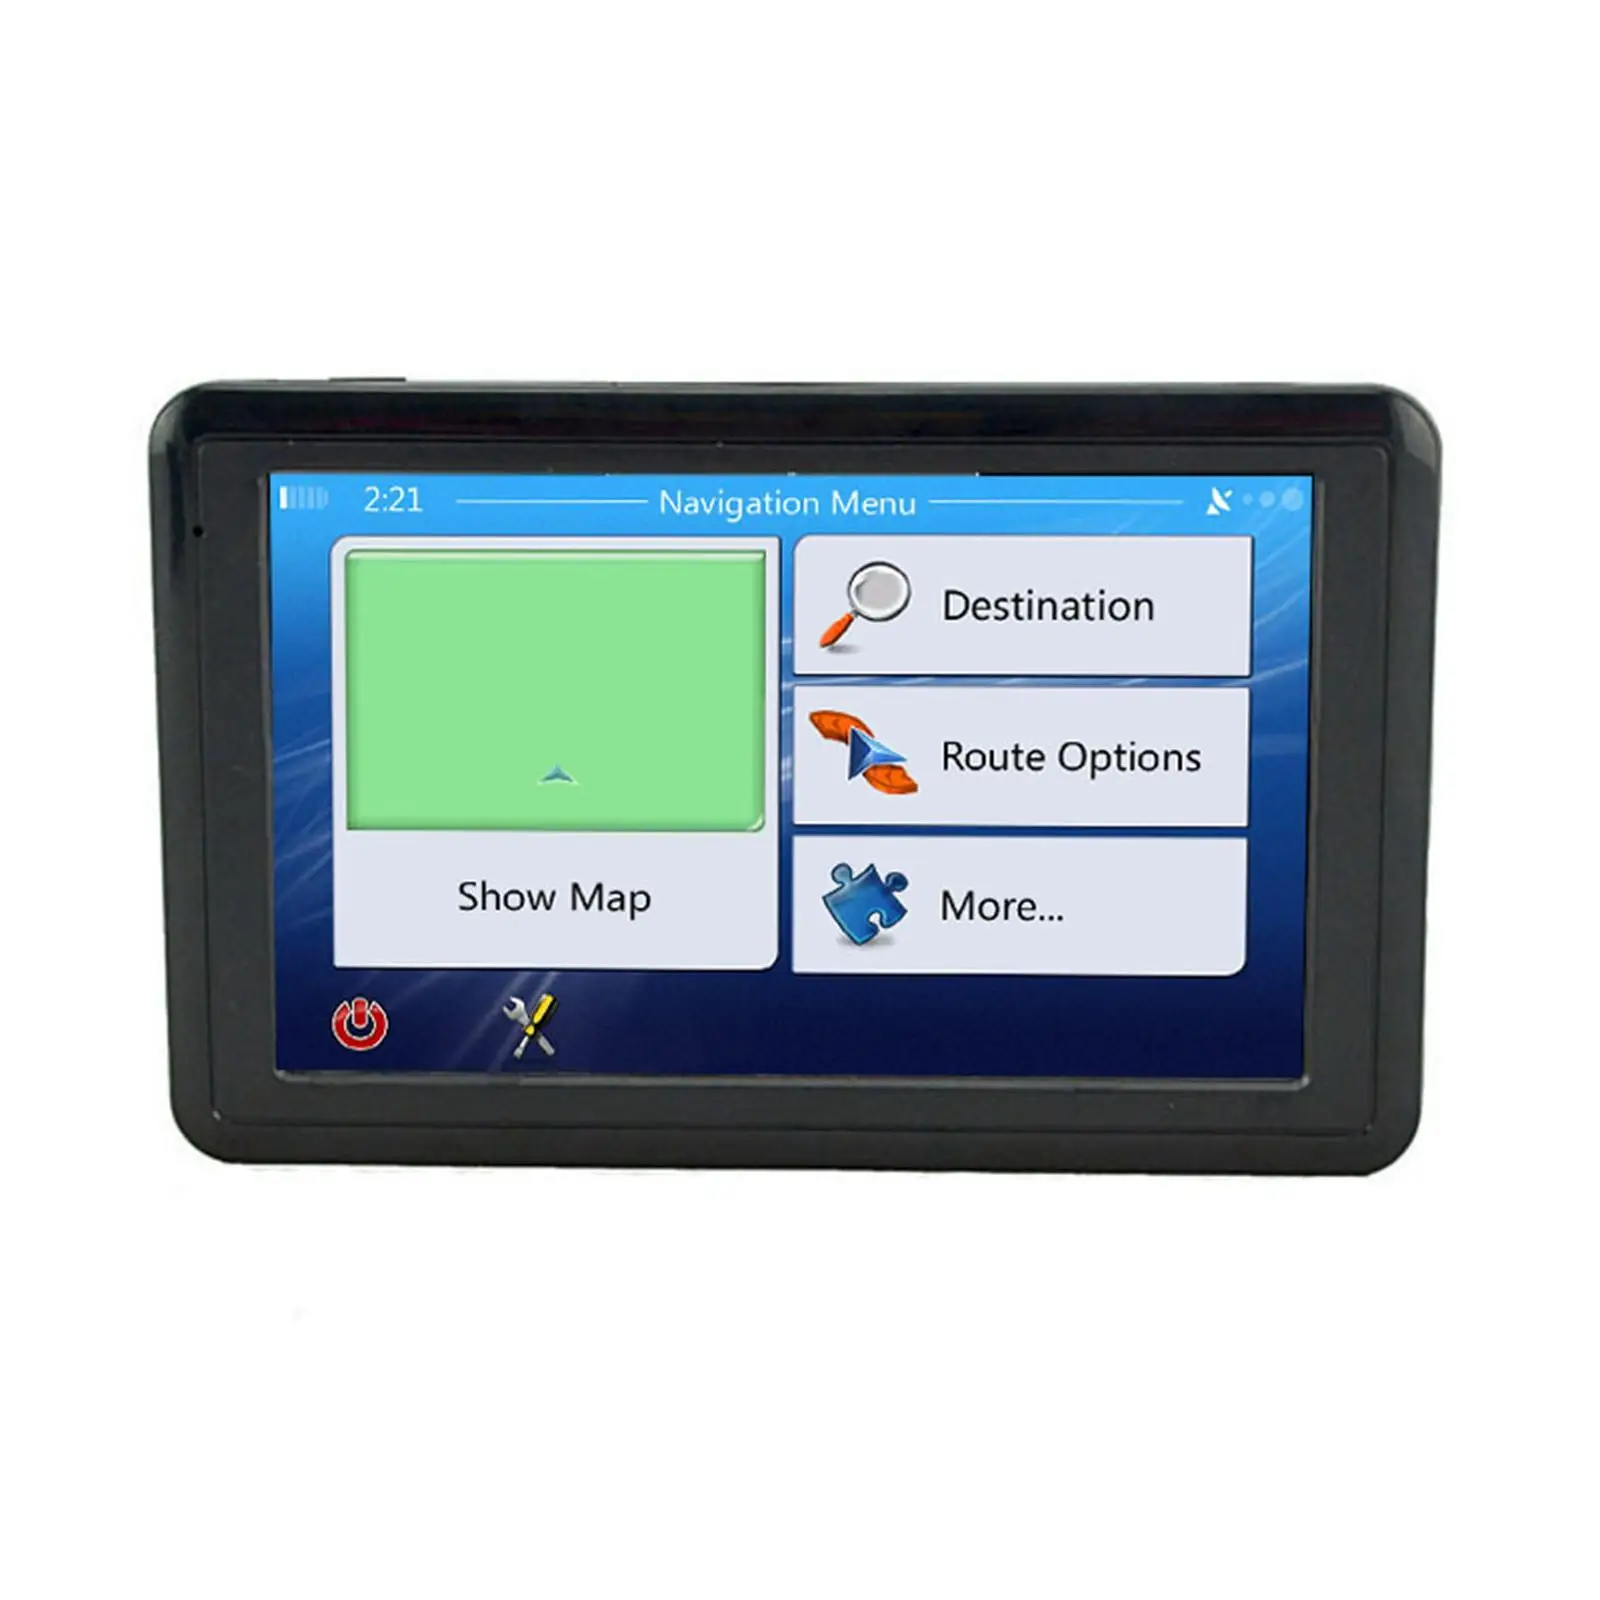 5 inch Touch Screen Car Truck GPS Navigation GPS Navigator, 8G &128 MB Multifunctional Vehicle Spoken Direction Driving Alert